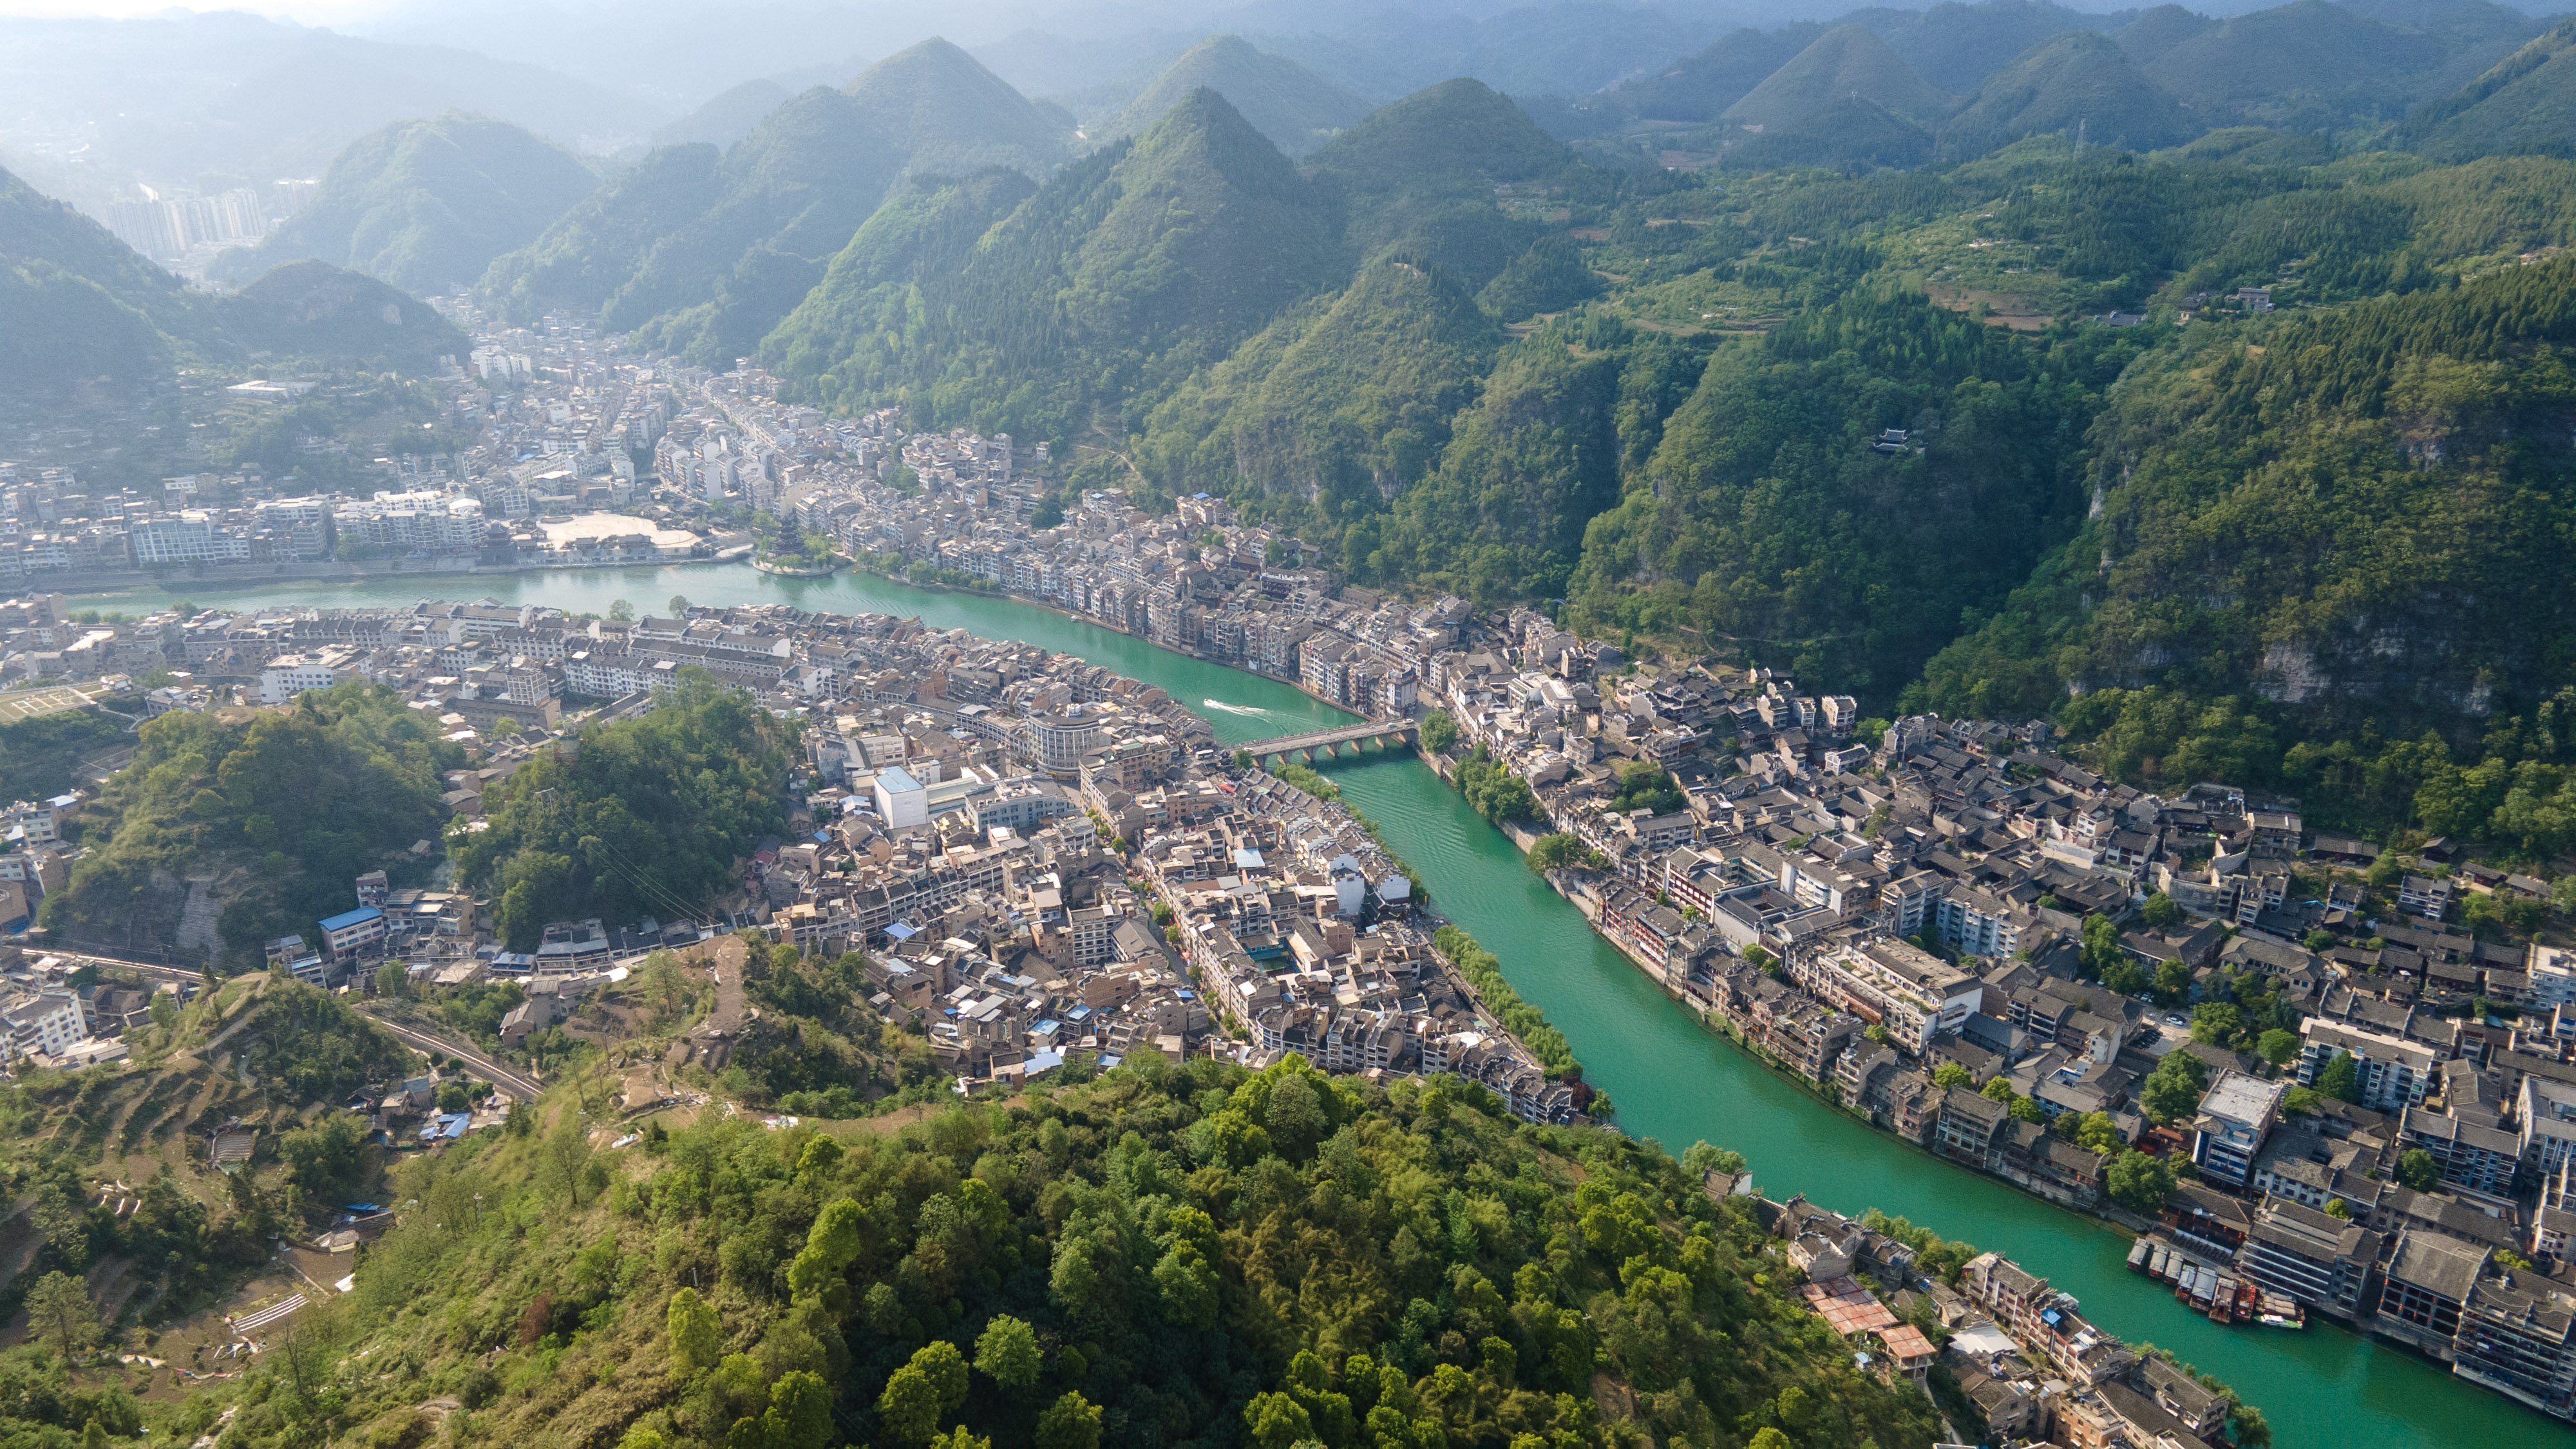 A bird's-eye view captures the beauty of Zhenyuan ancient town in Guizhou. /CNSPHOTO